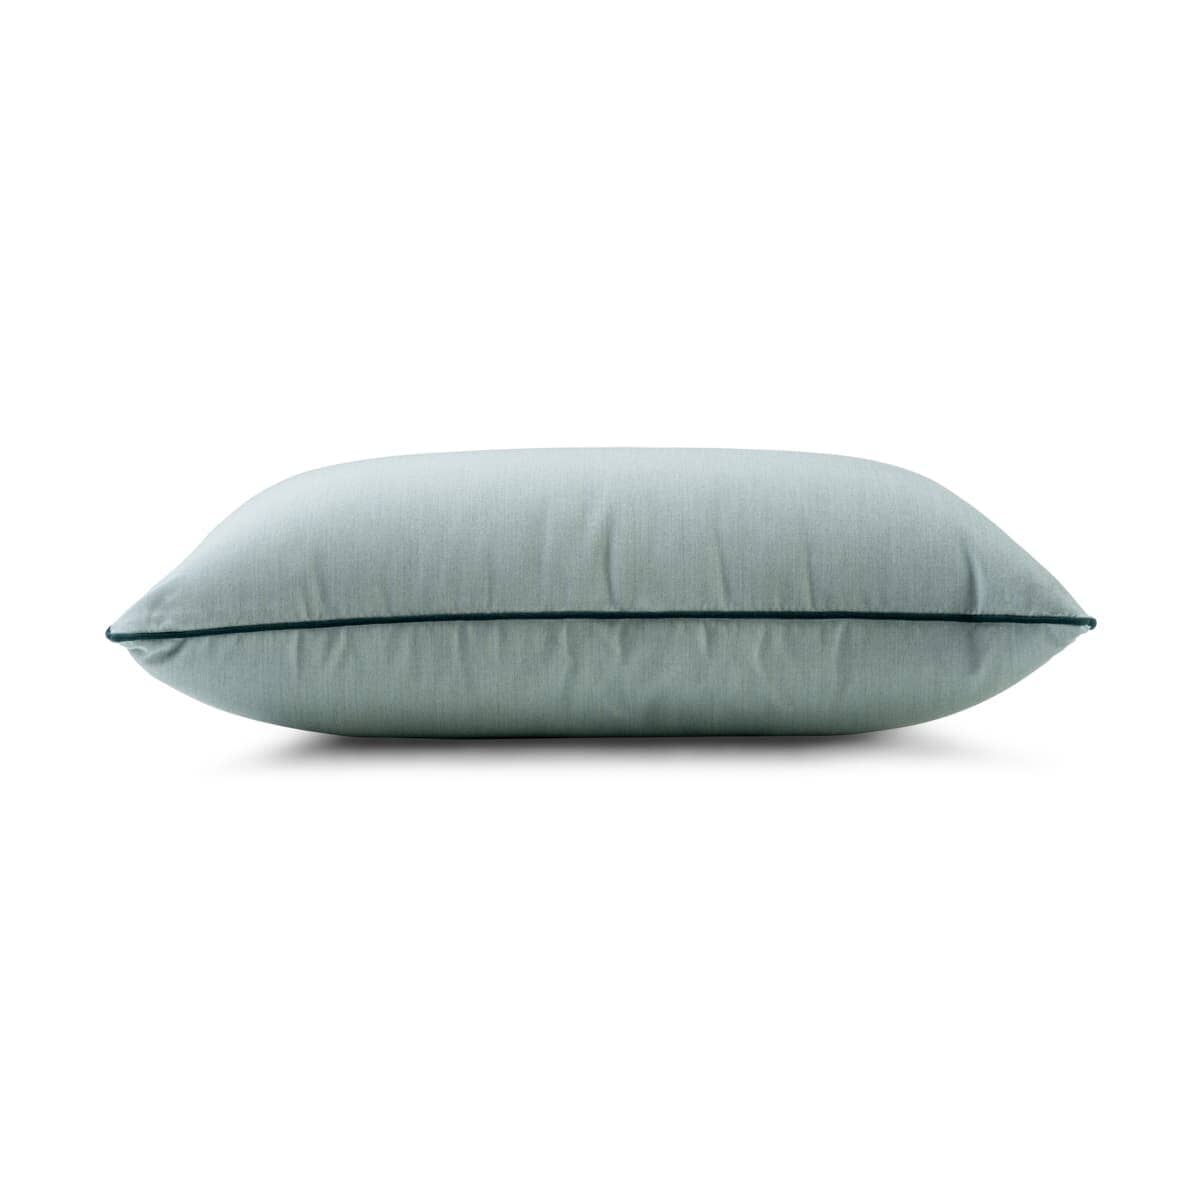 Studio image of riviera green throw pillow